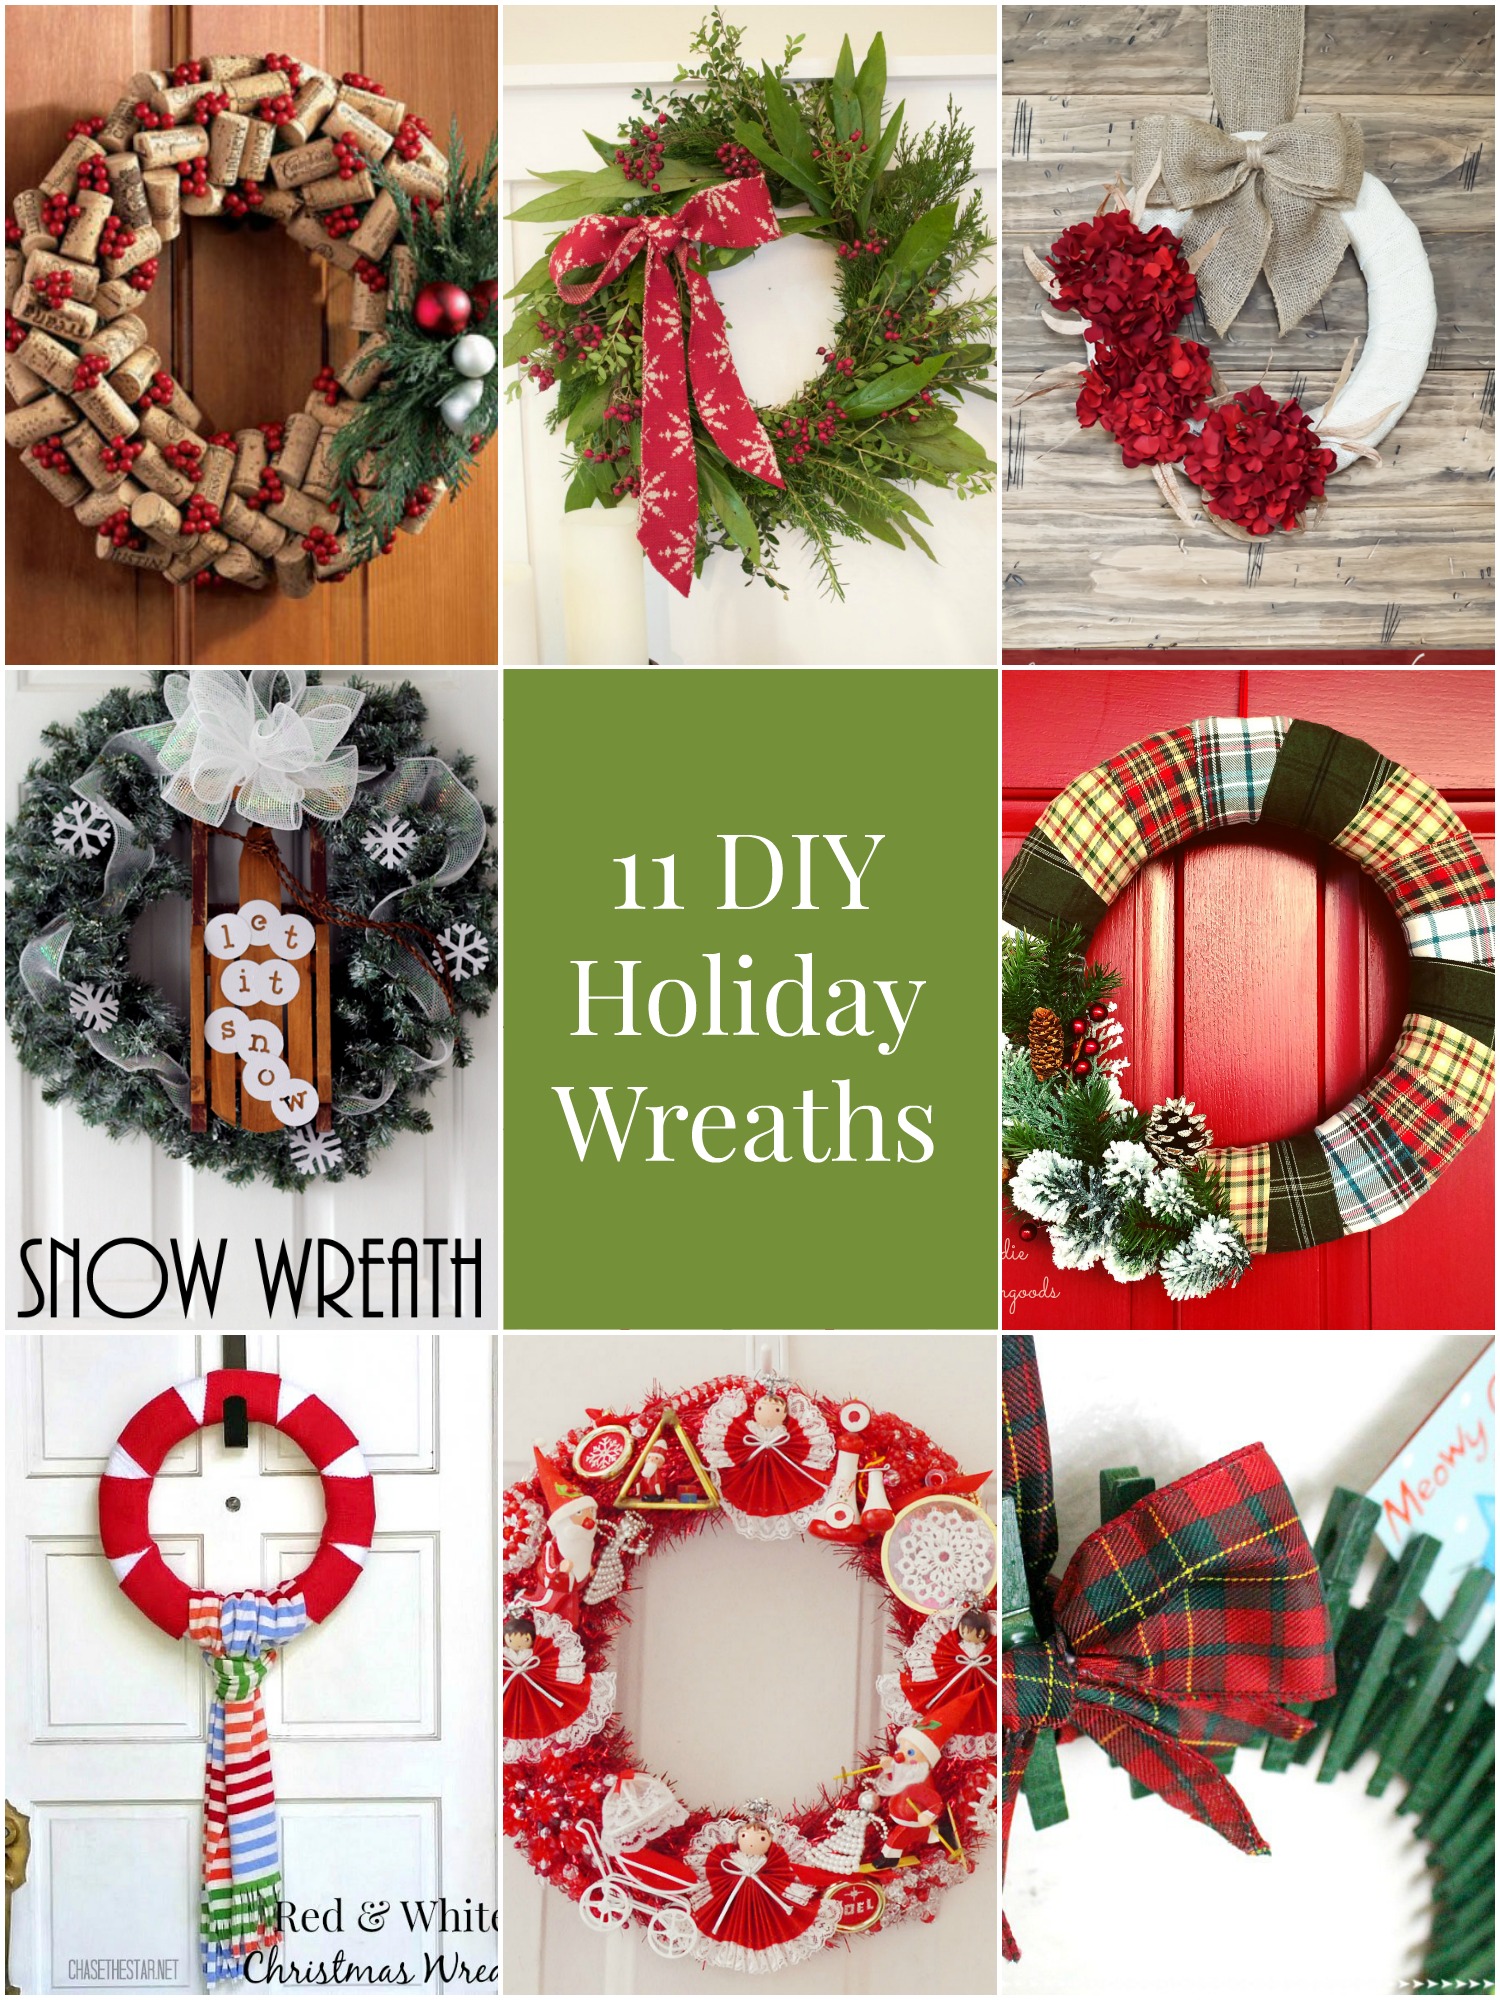 So Creative! - 11 DIY Holiday Wreaths – Practically Functional